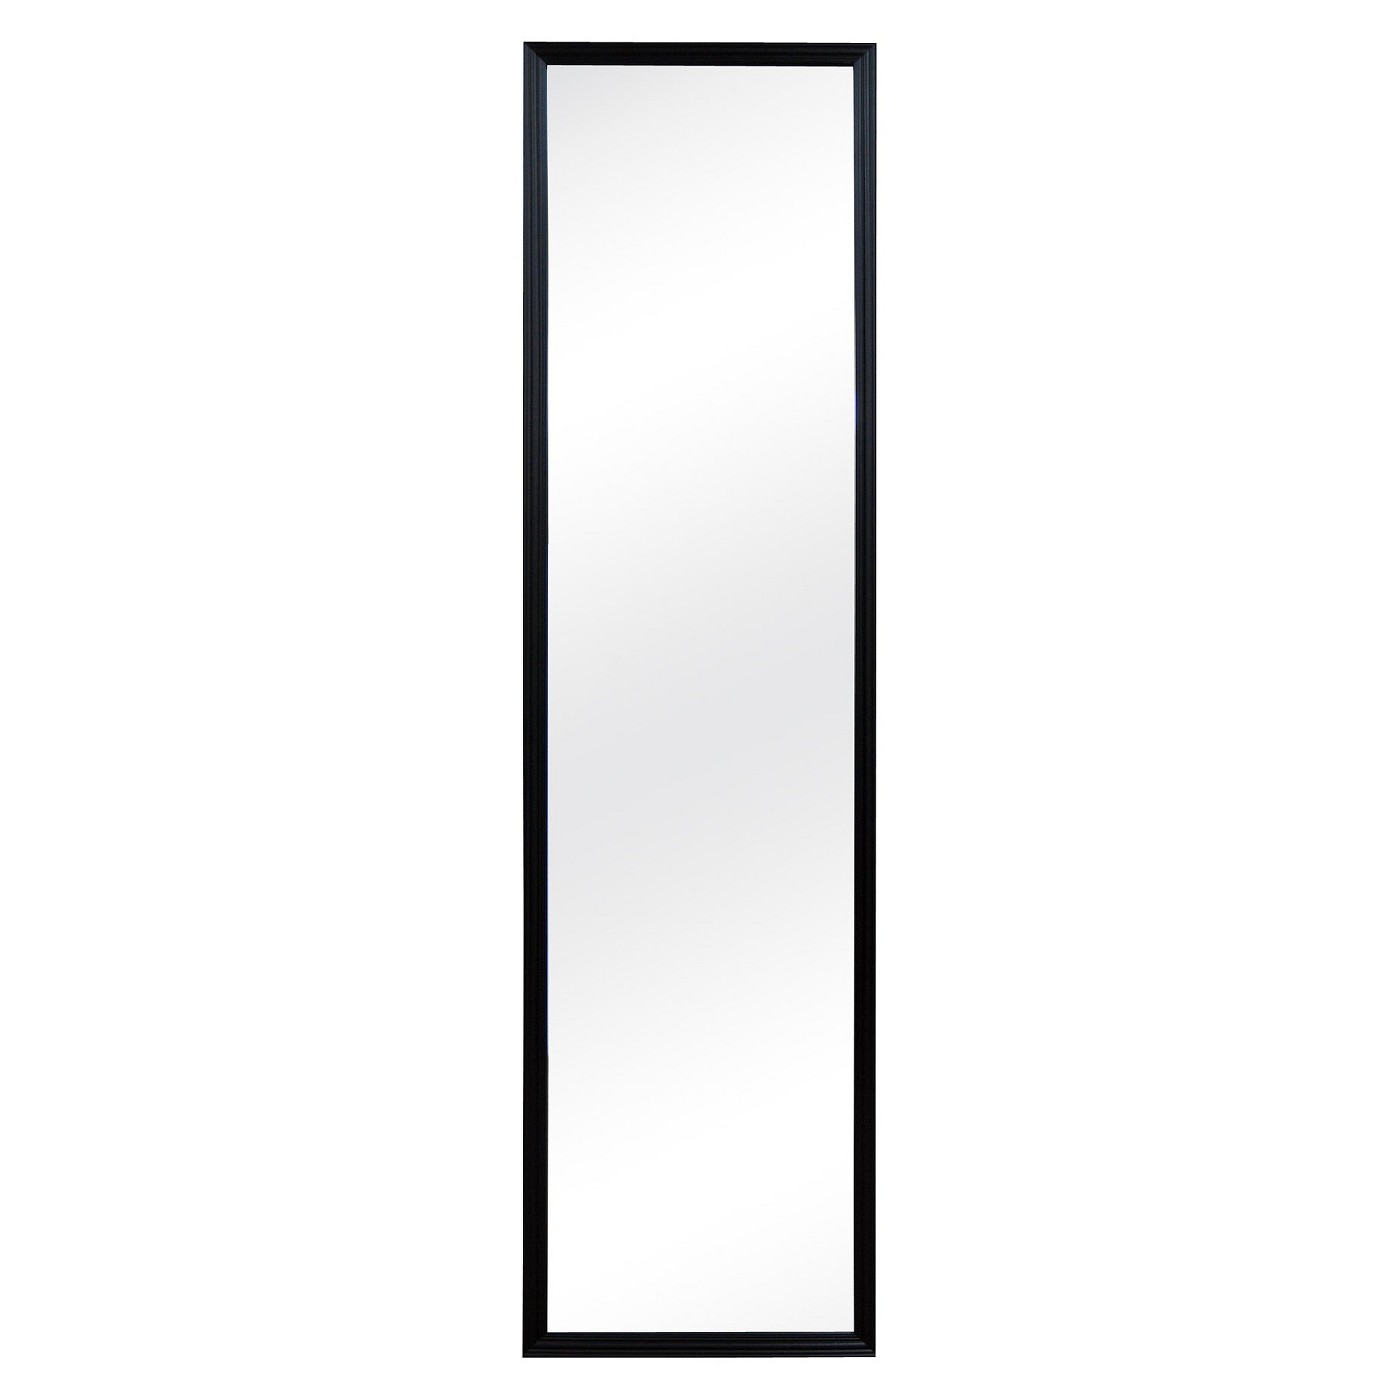 Framed Floor Mirror - Room Essentials™ - image 1 of 5